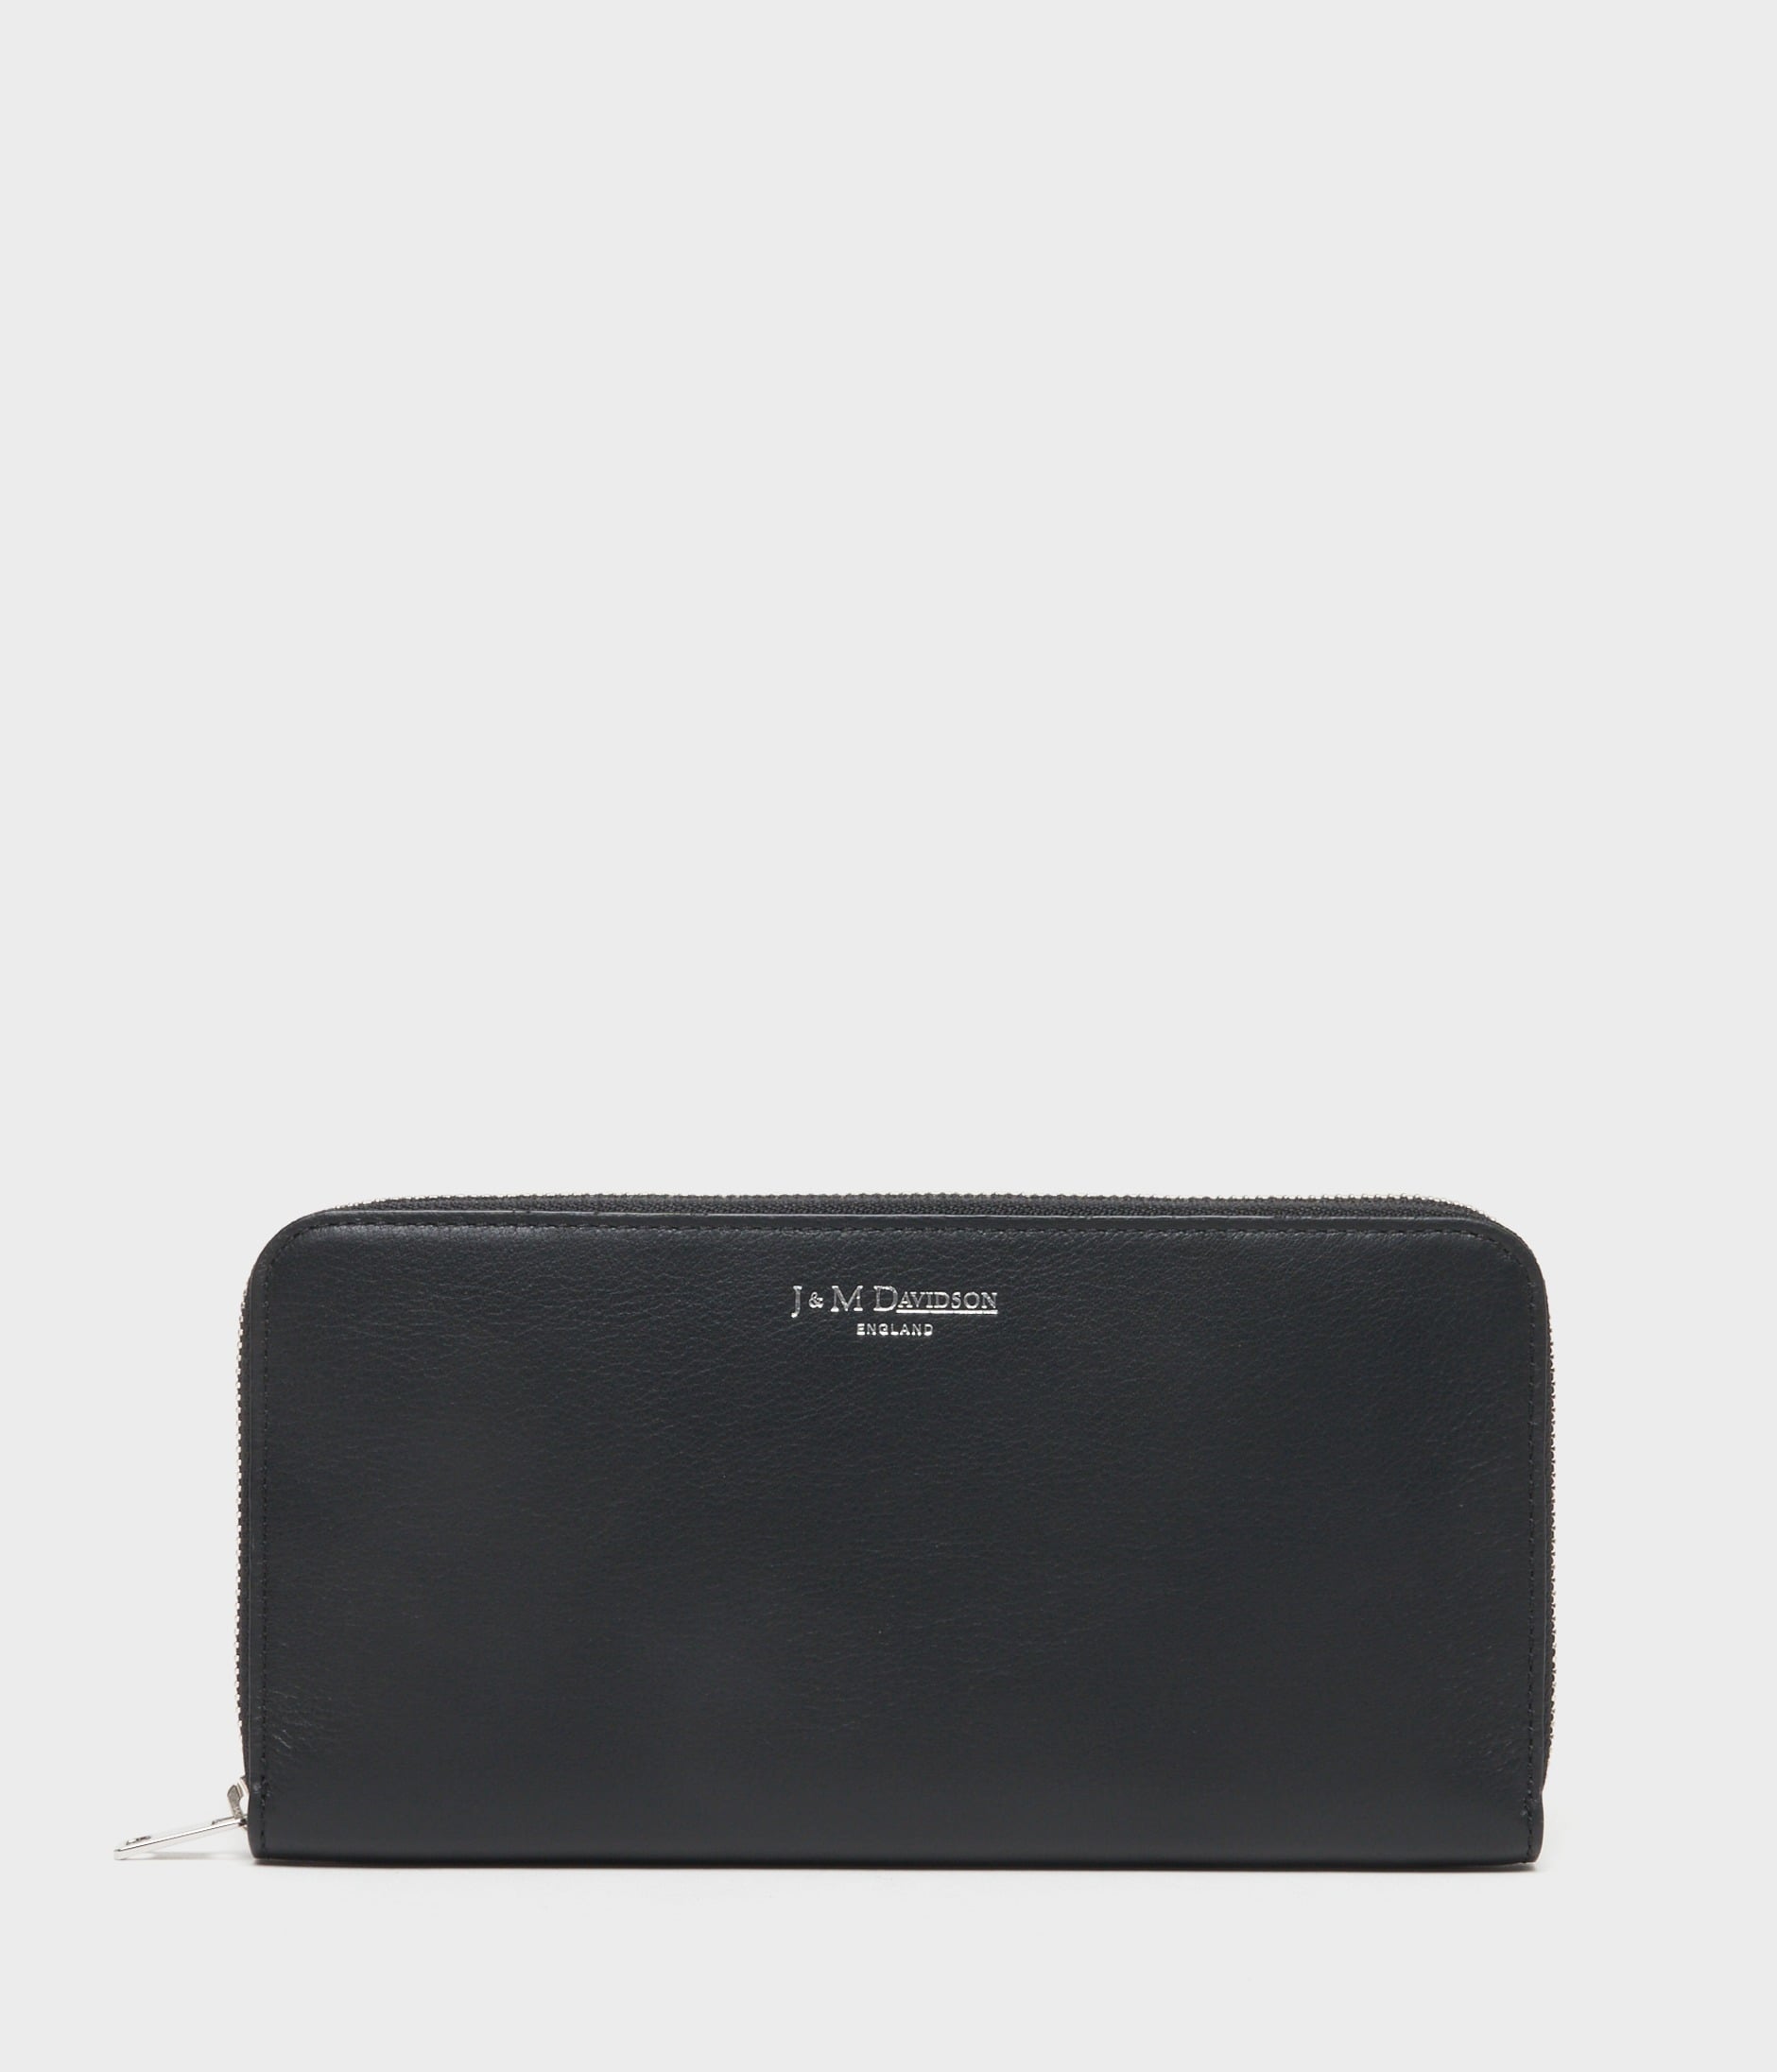 J&M DAVIDSON SMALL ZIP PURSEファッション小物 - 財布